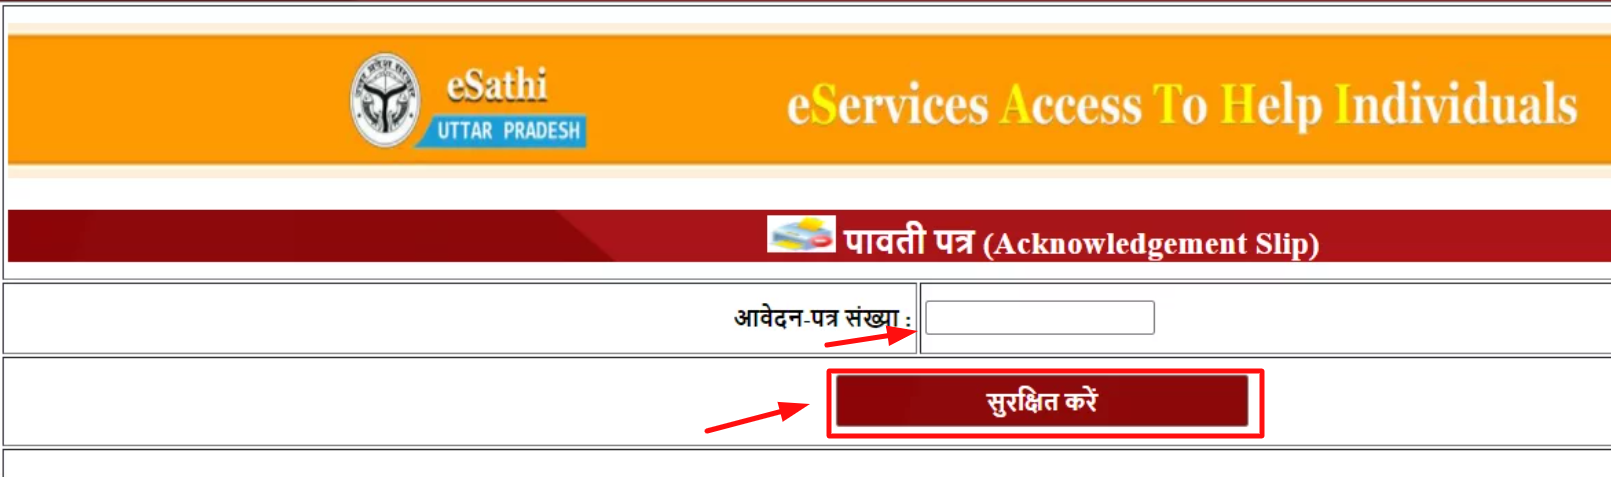 uttar pradesh parivar register - payment ricipt print out